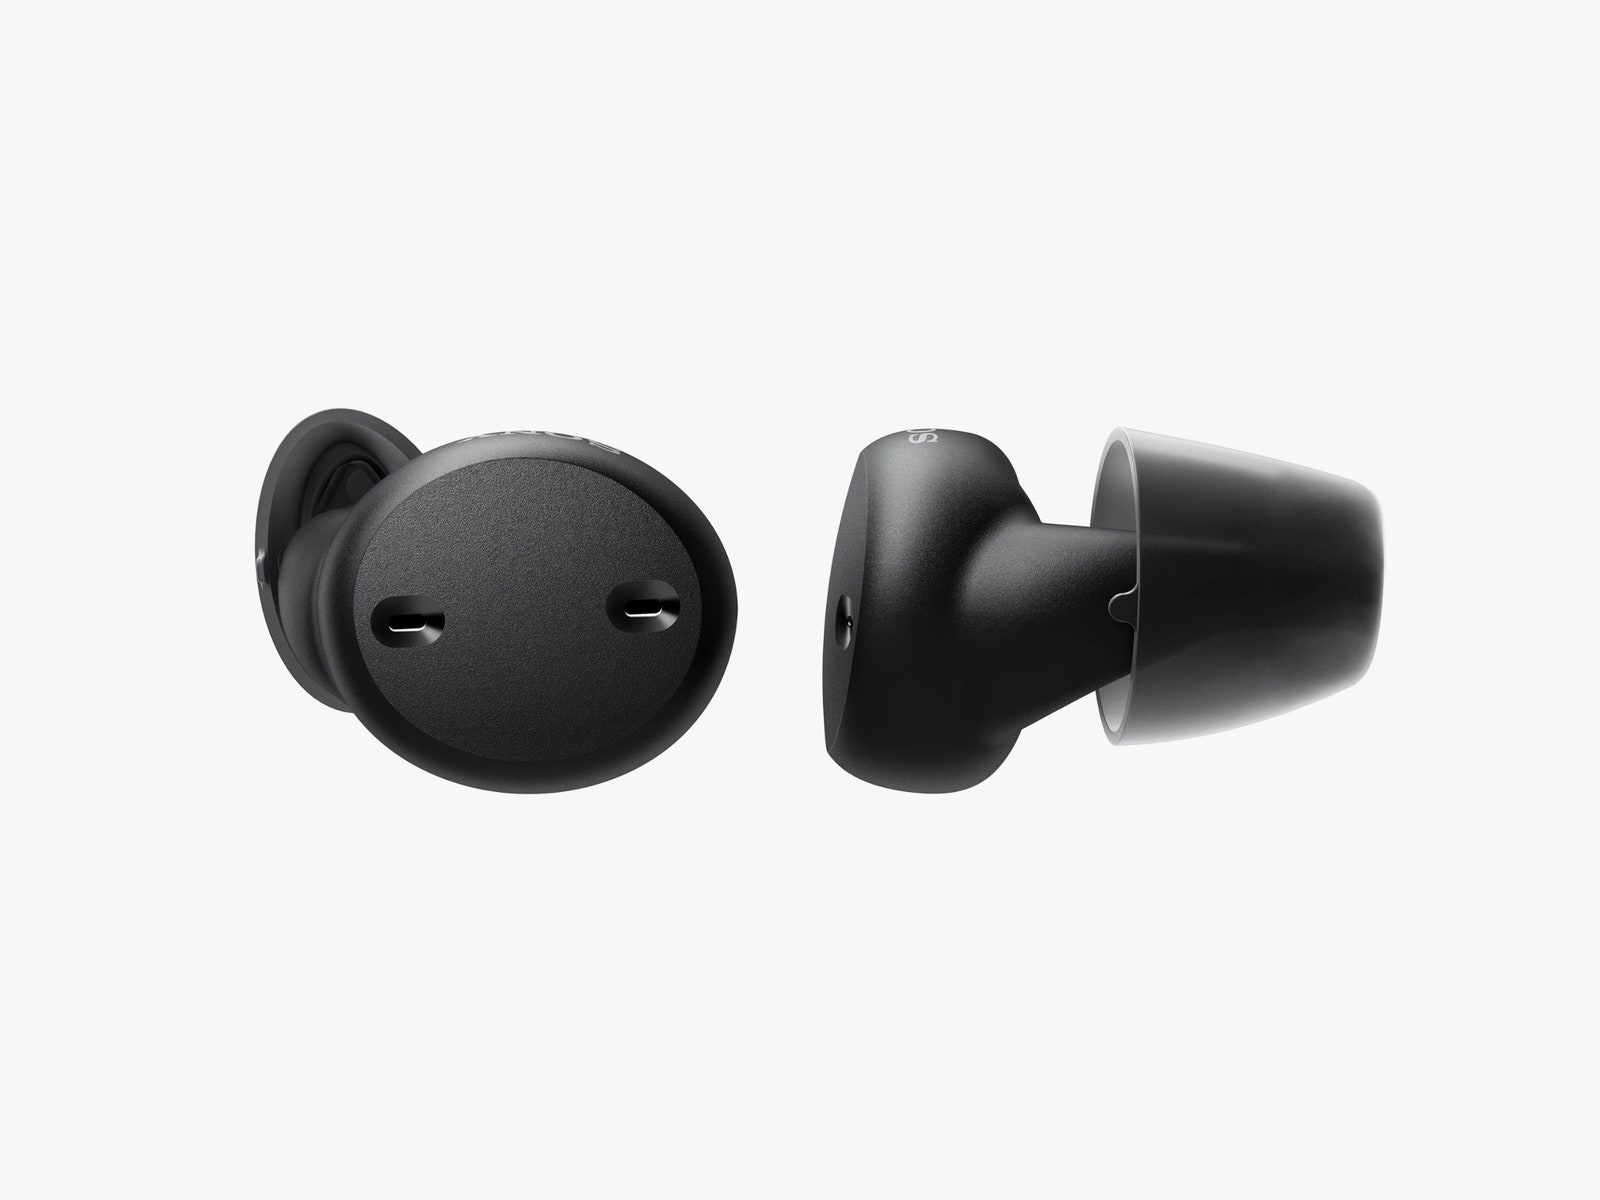 Side view of two black in-ear headphones